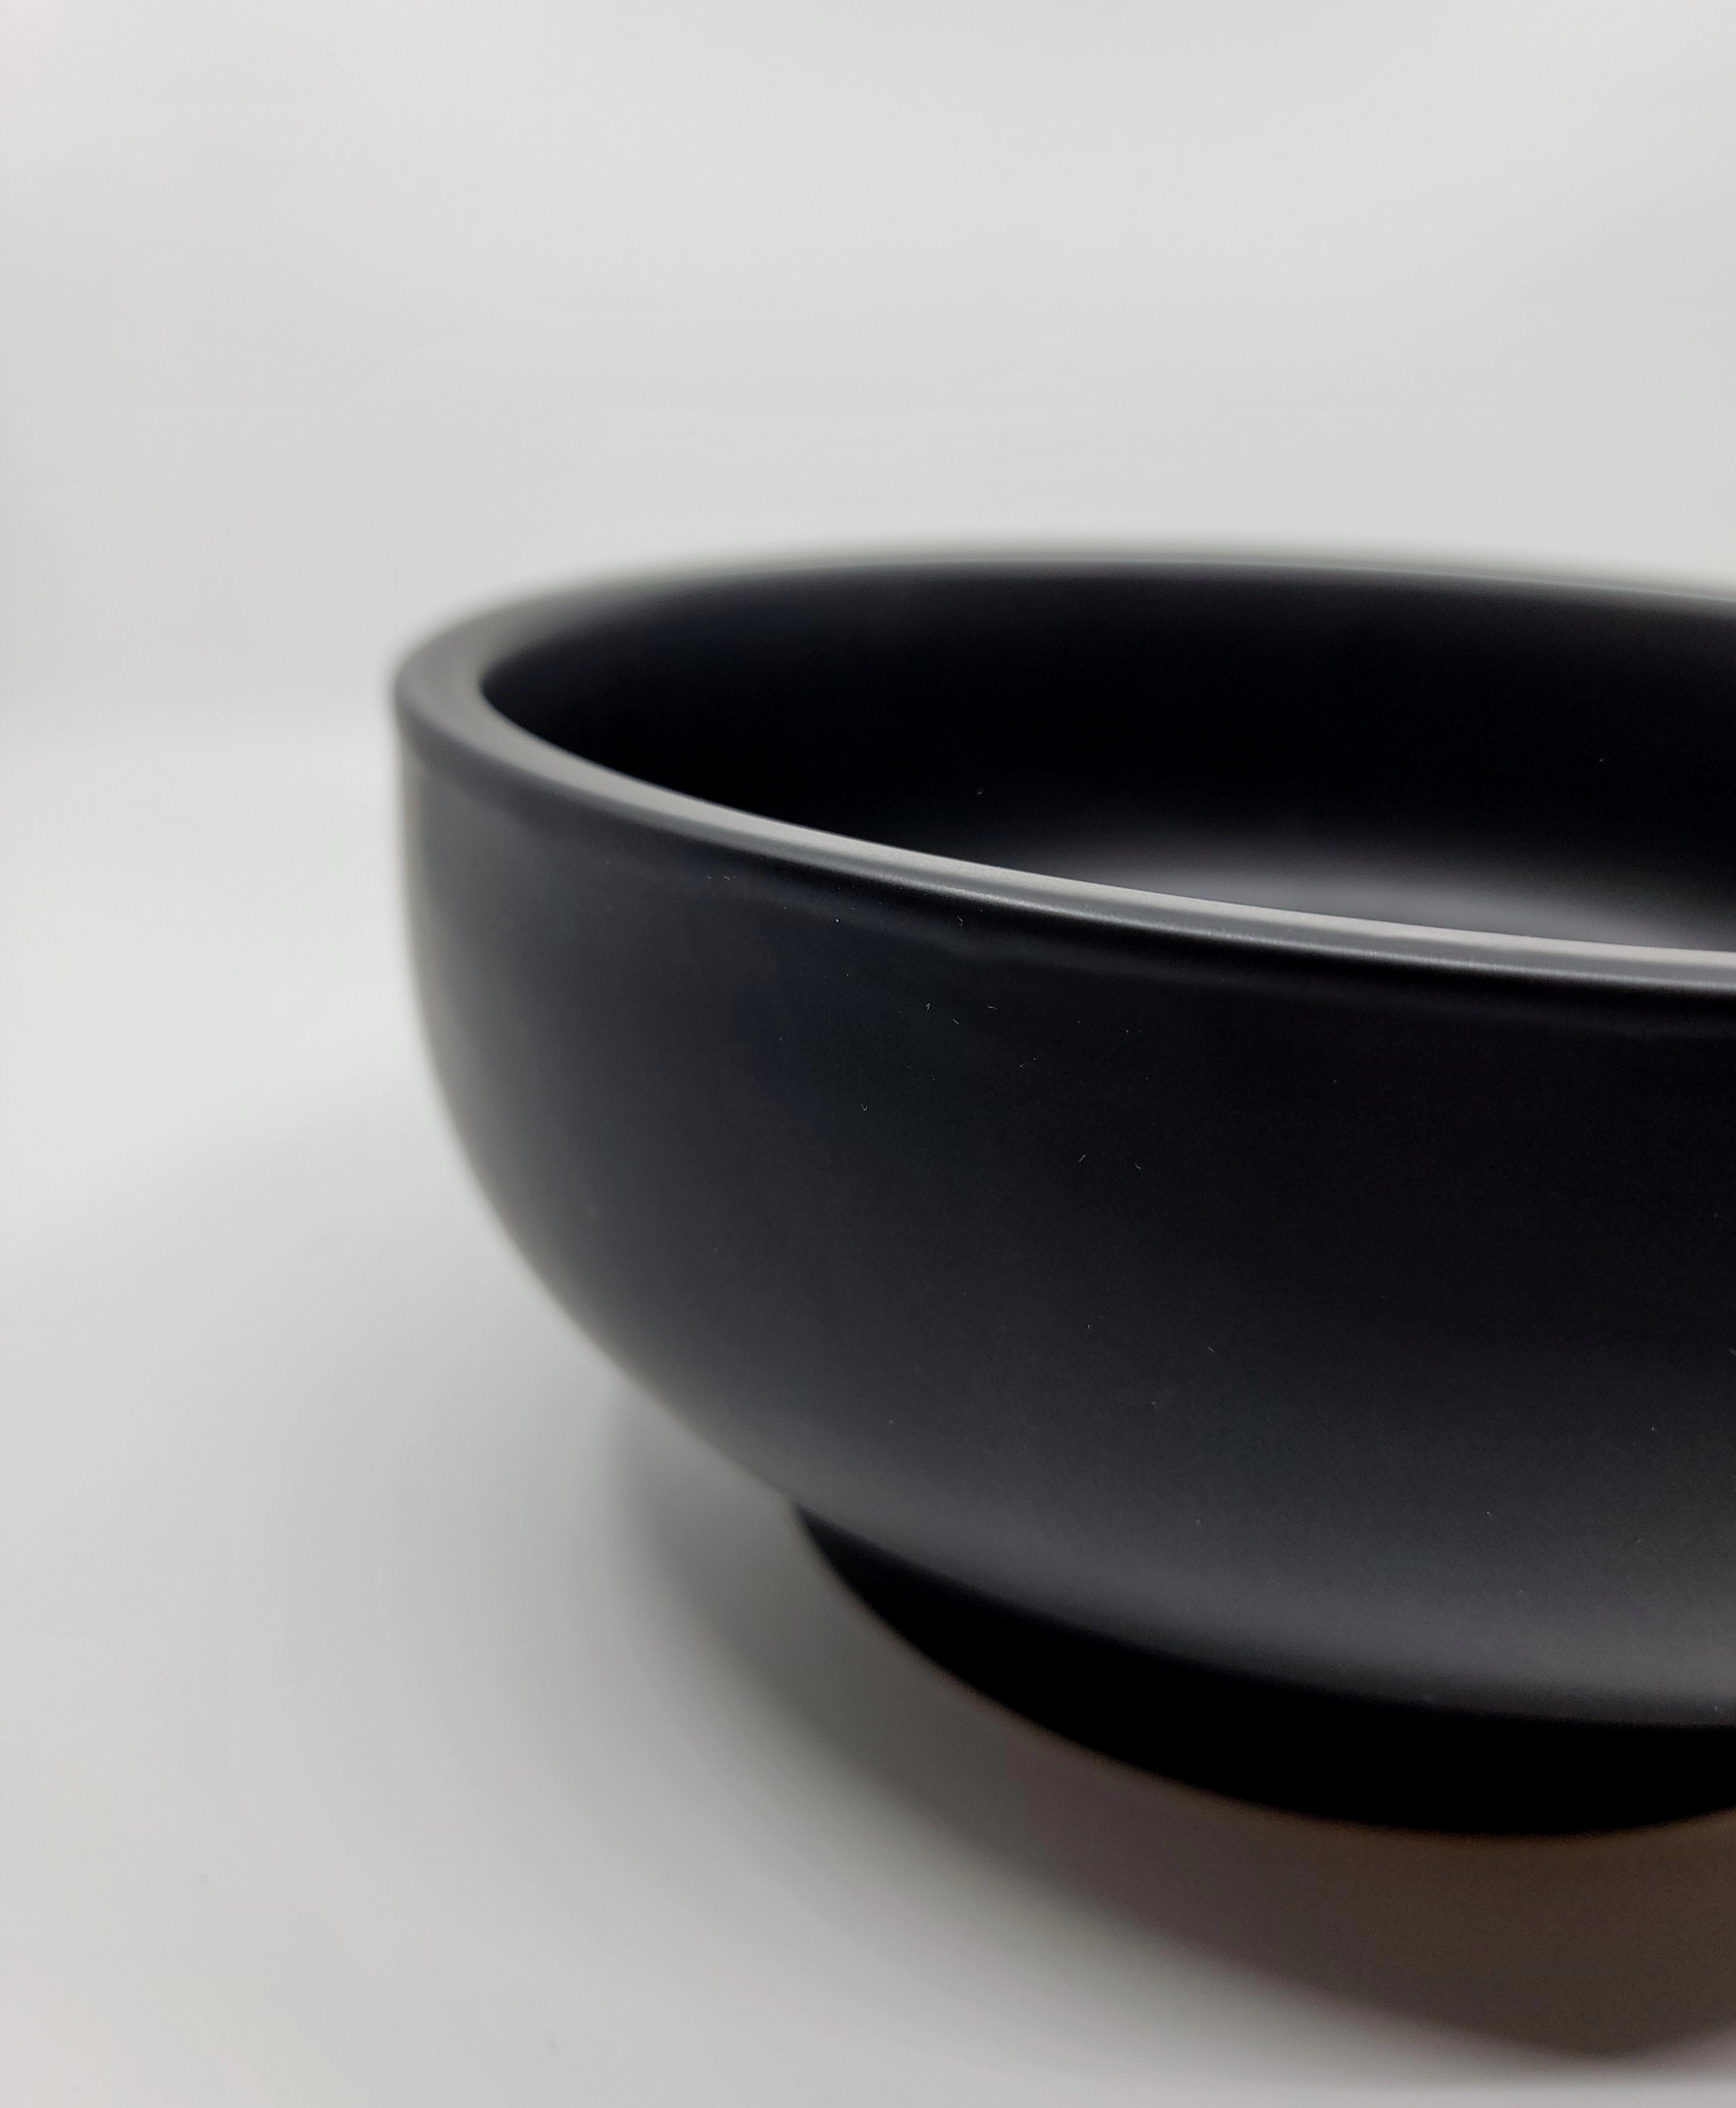 Gemstone 9" Pedestal Bowl by Momma Pots